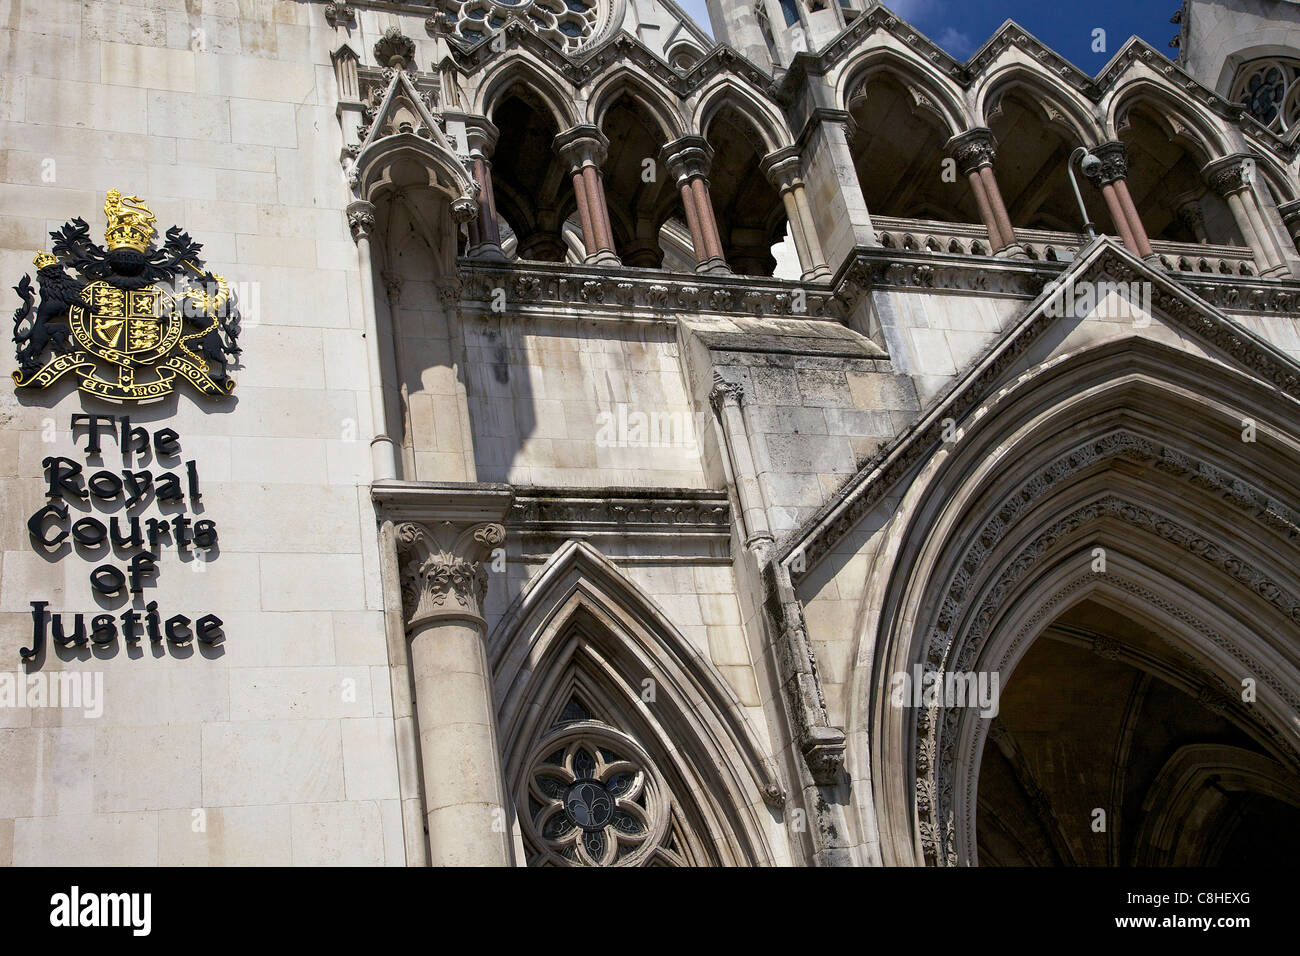 Royal Courts of Justice, City of London, England, UK, Royaume-Uni, GO, Grande-Bretagne, British Isles, Europe Banque D'Images